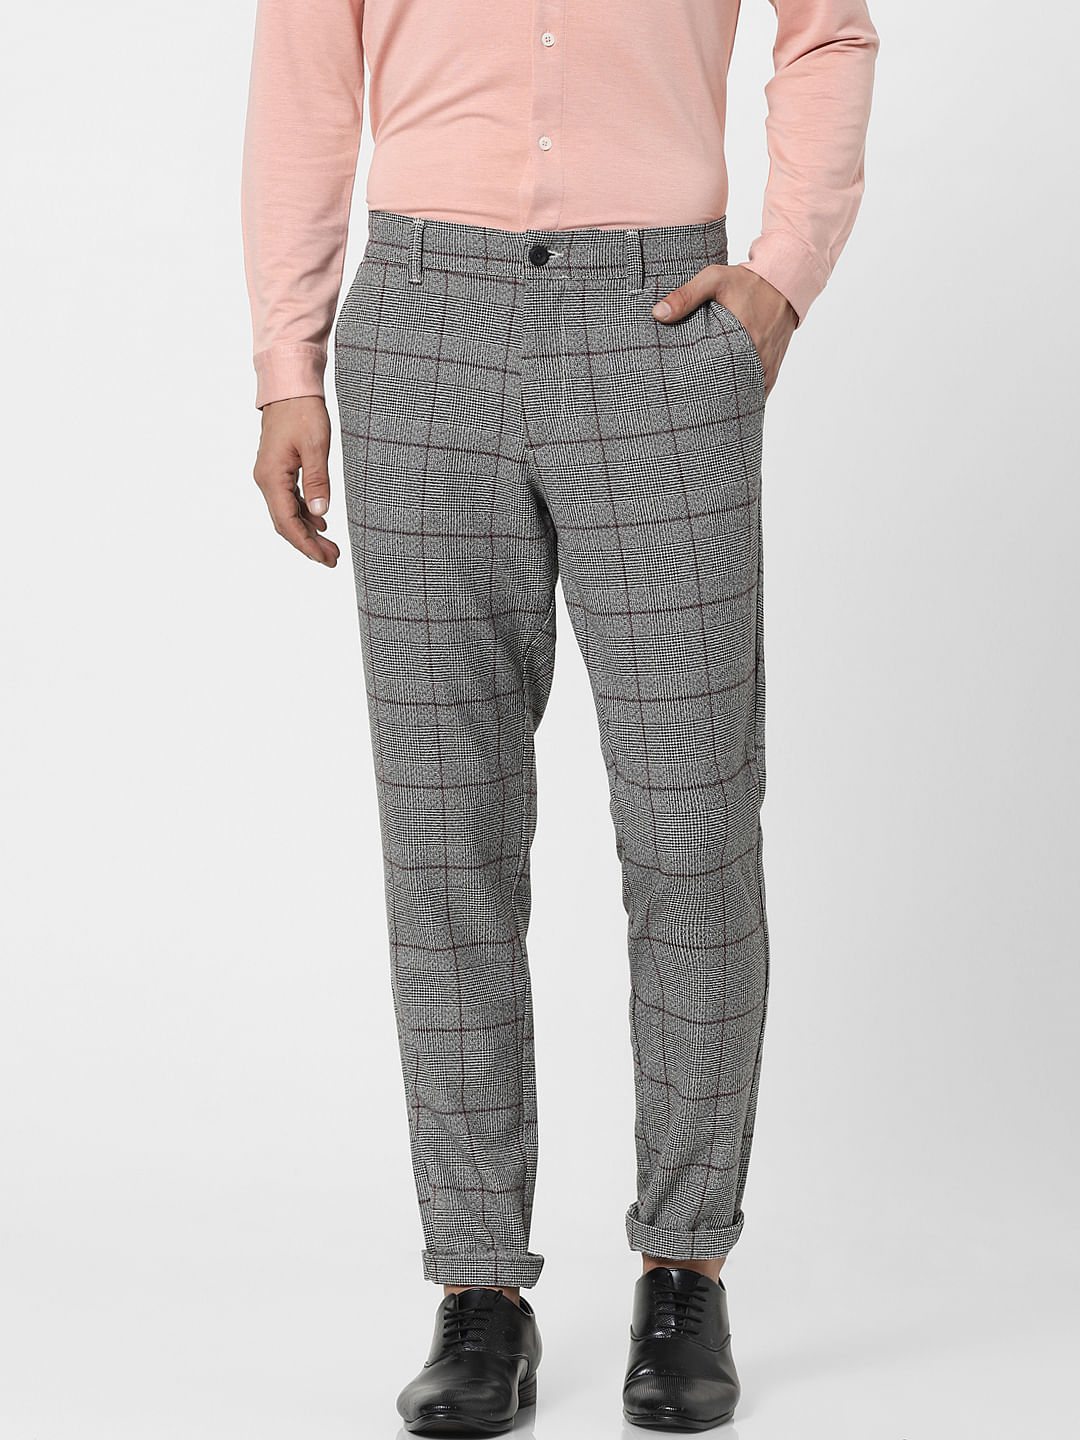 Formal Trouser Browse Men Dark Grey Cotton Blend Formal Trouser on  Clithscom